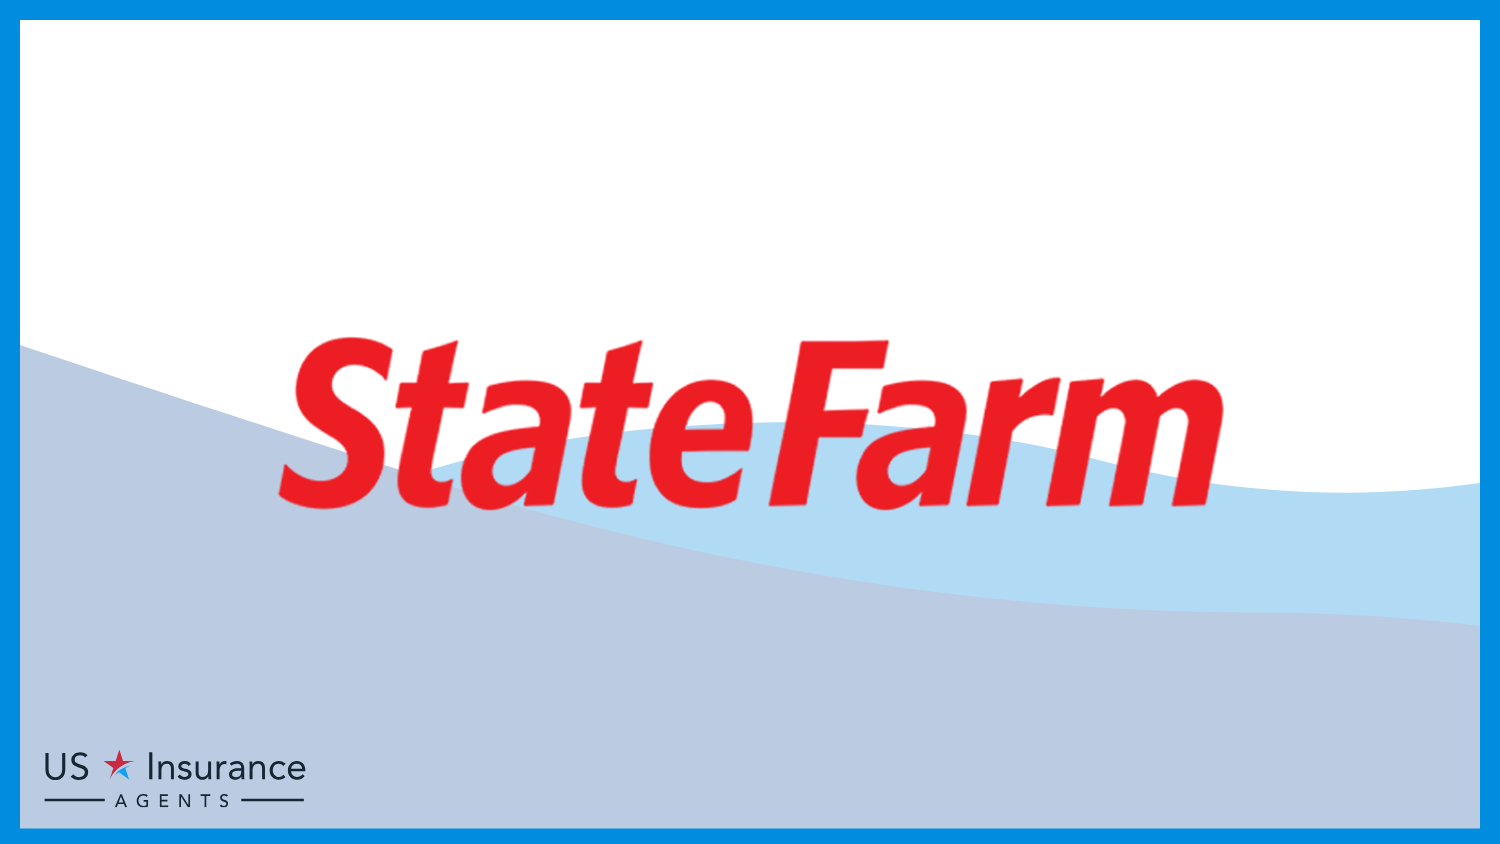 State Farm: Best Business Insurance for eBay Businesses